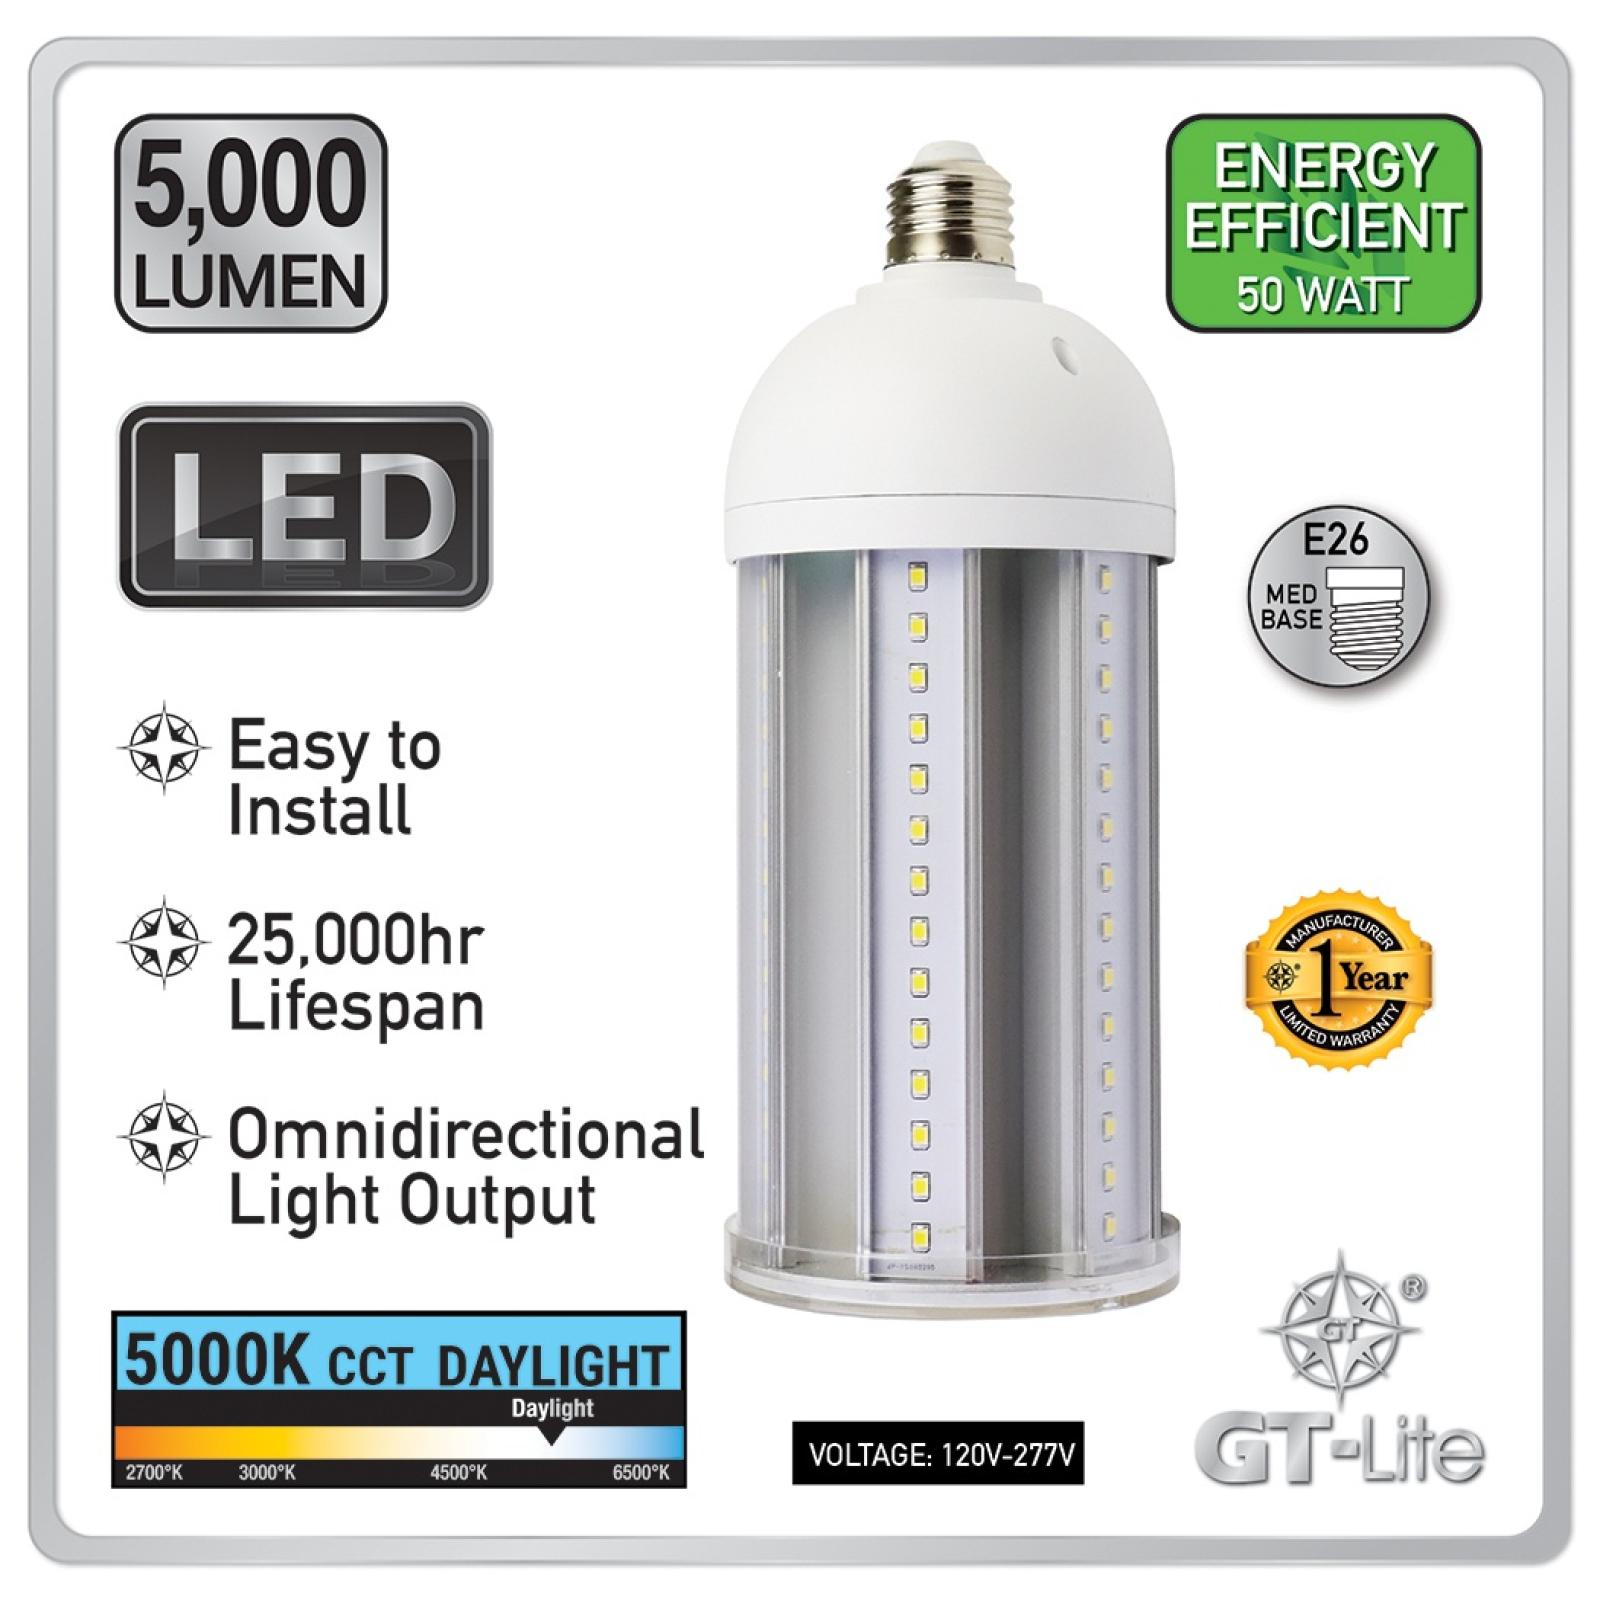 GT-Lite 50W COB Daylight LED Light Bulb